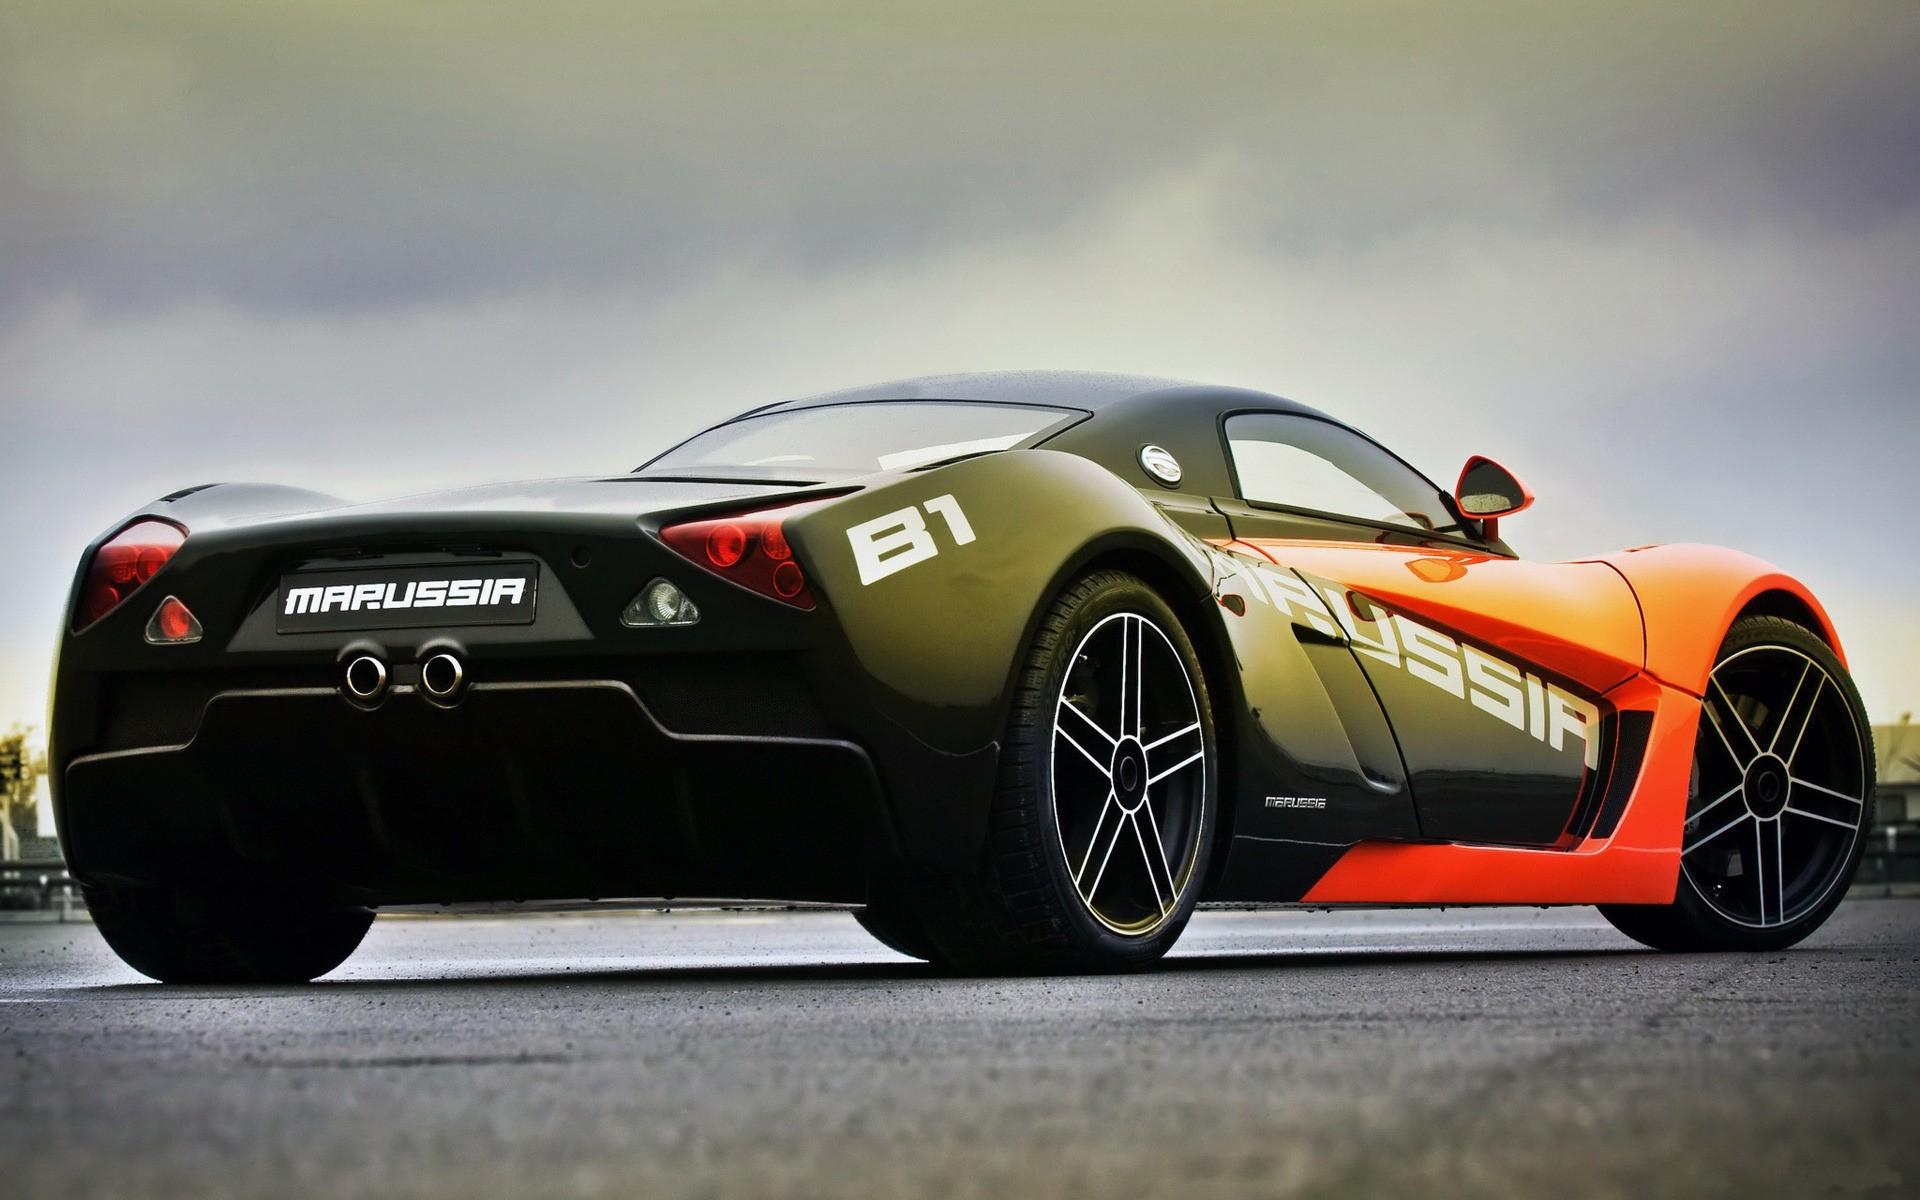 Download desktop wallpaper Black and orange Russian sports car Marus